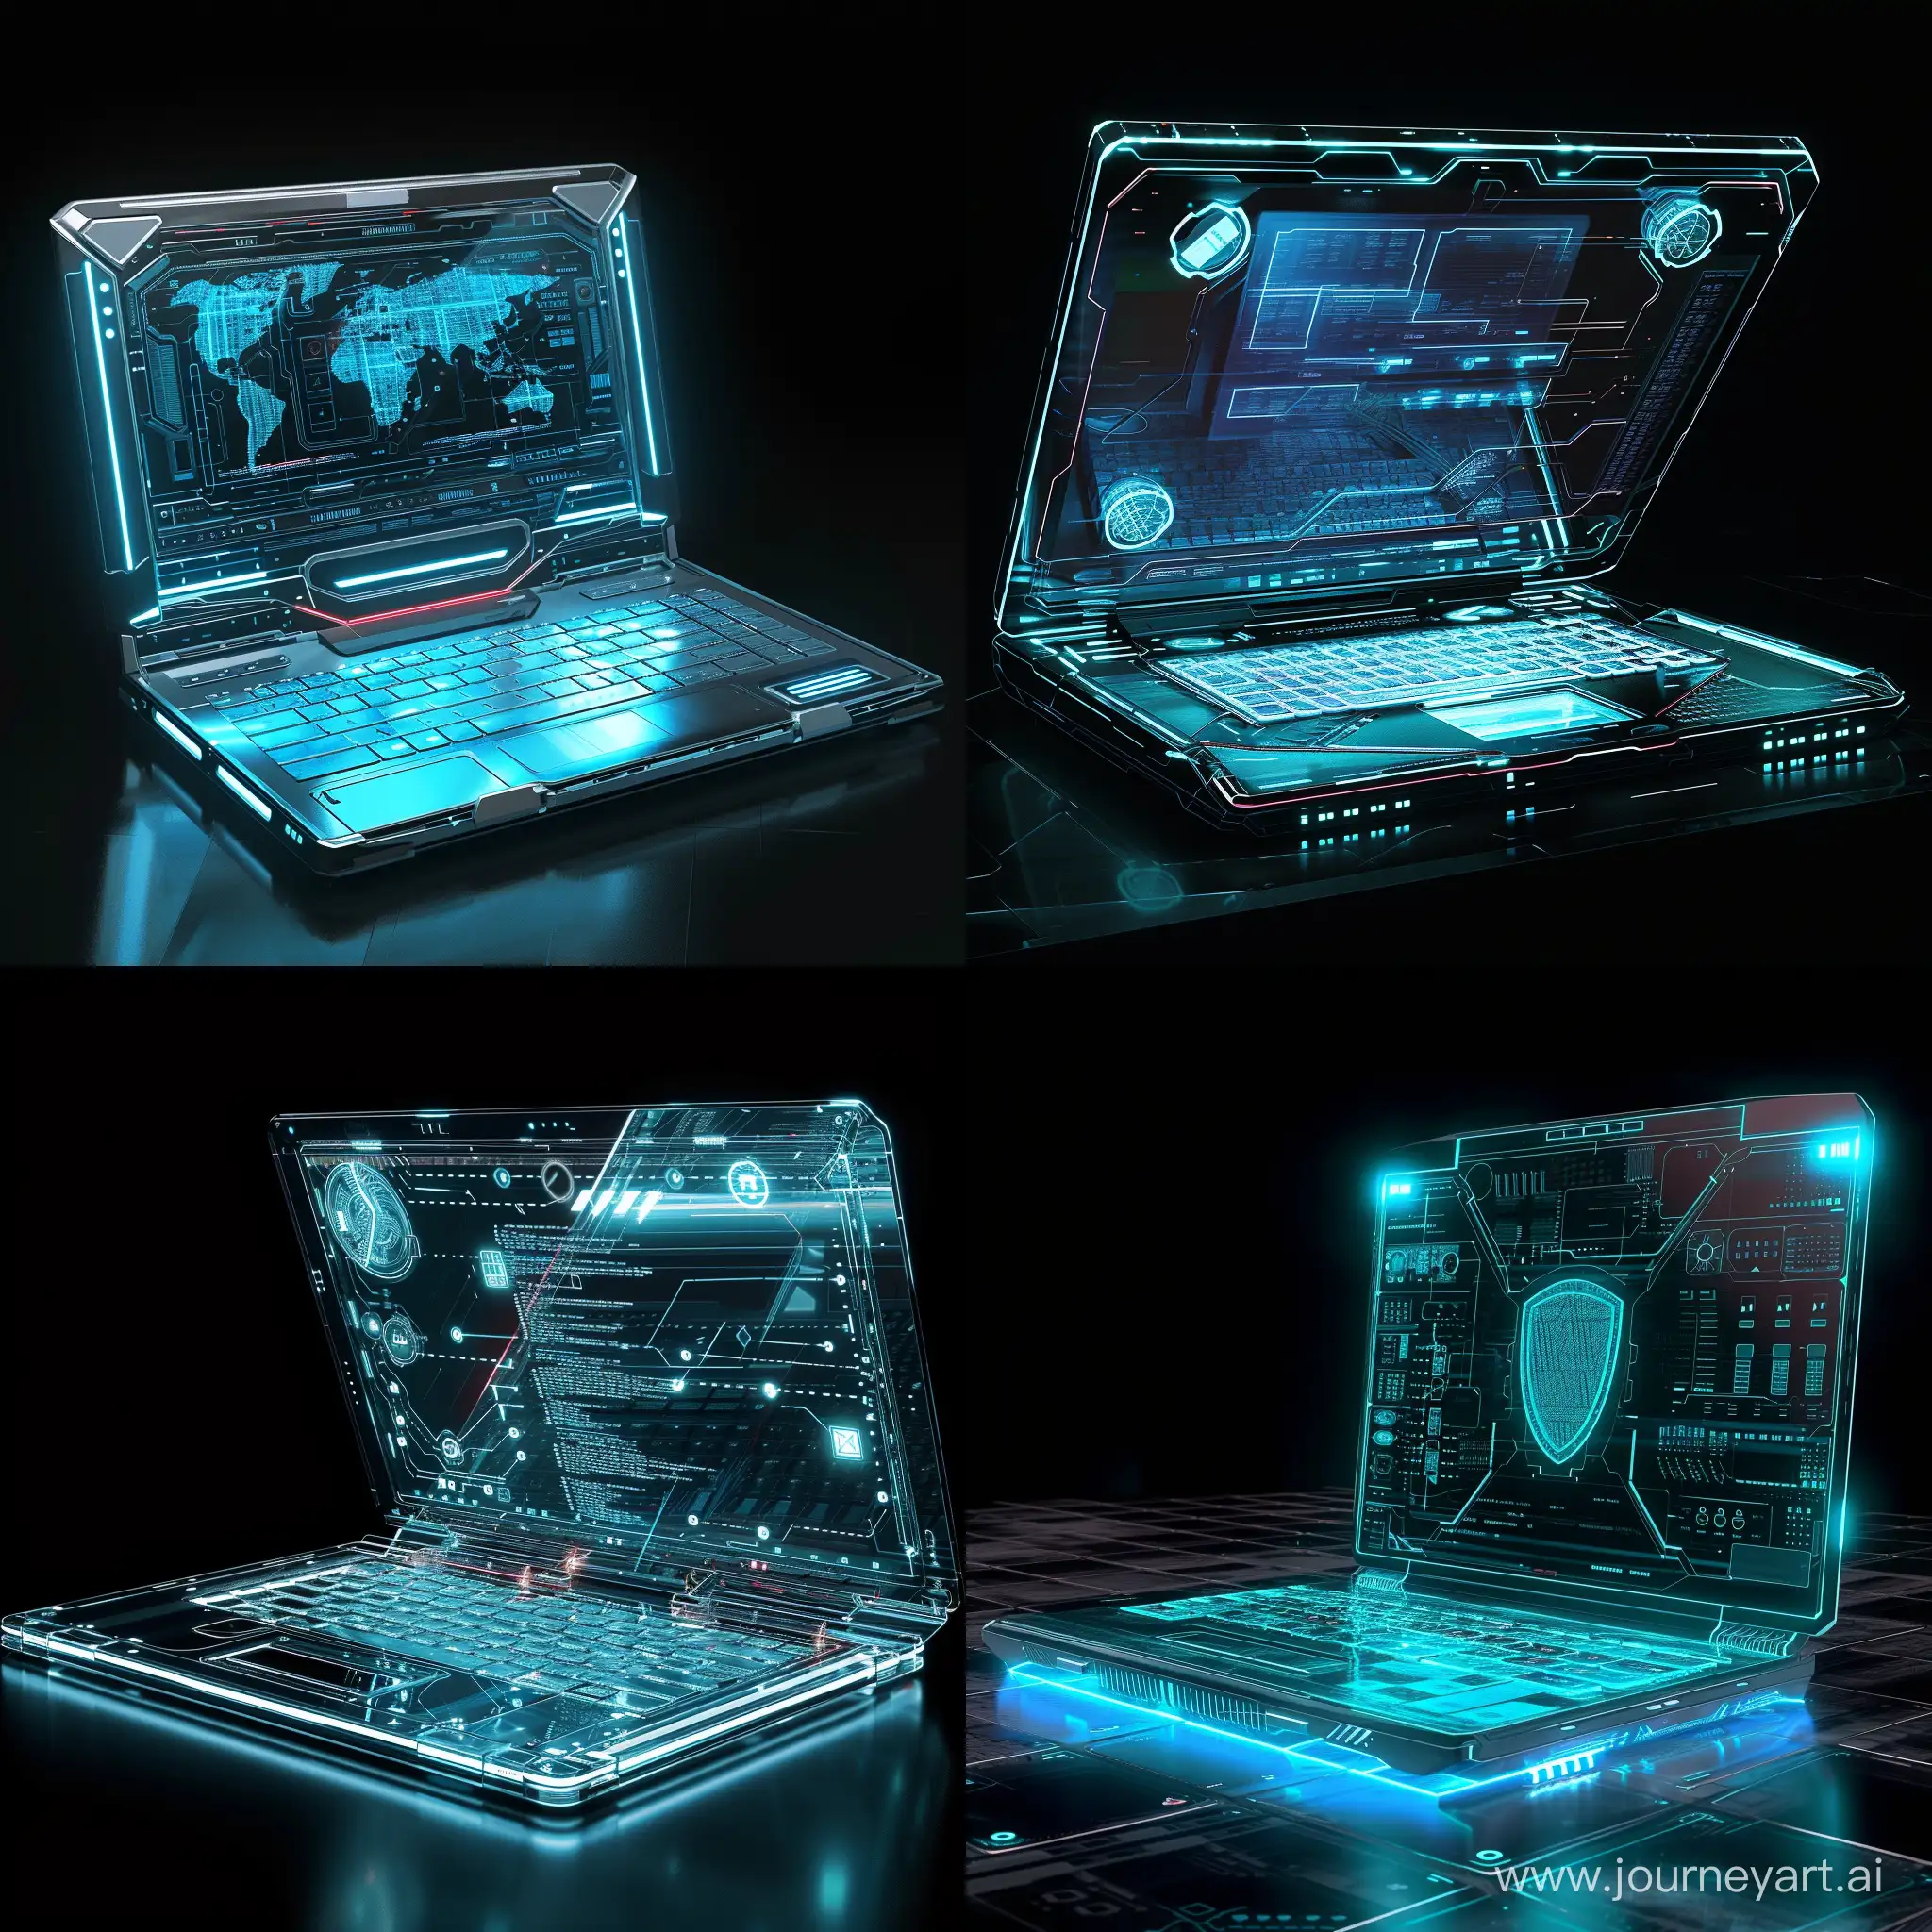 Futuristic cyber laptop, far future